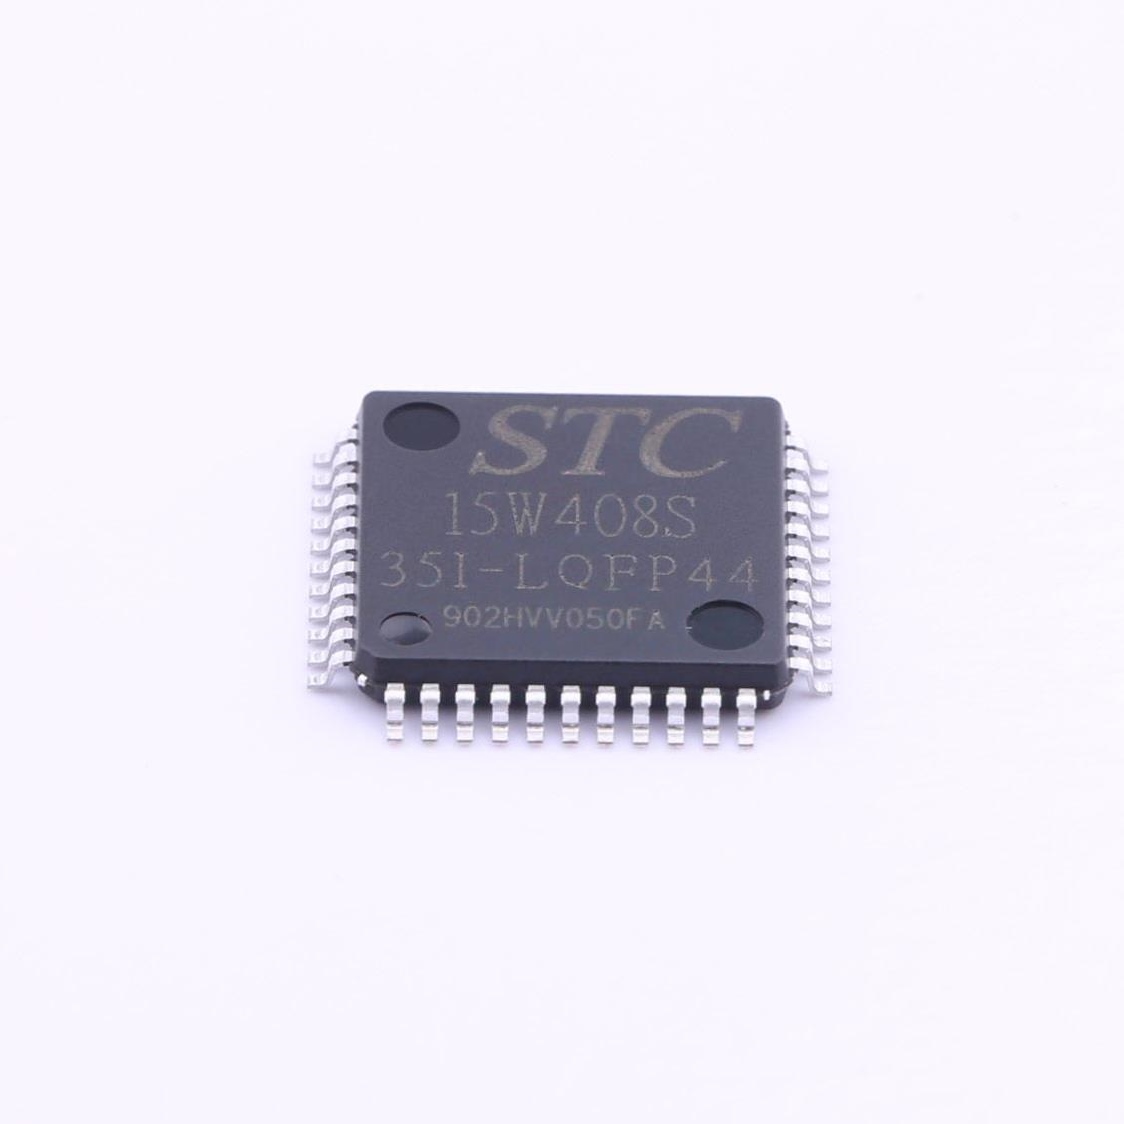 STC15W408S-35I-LQFP44